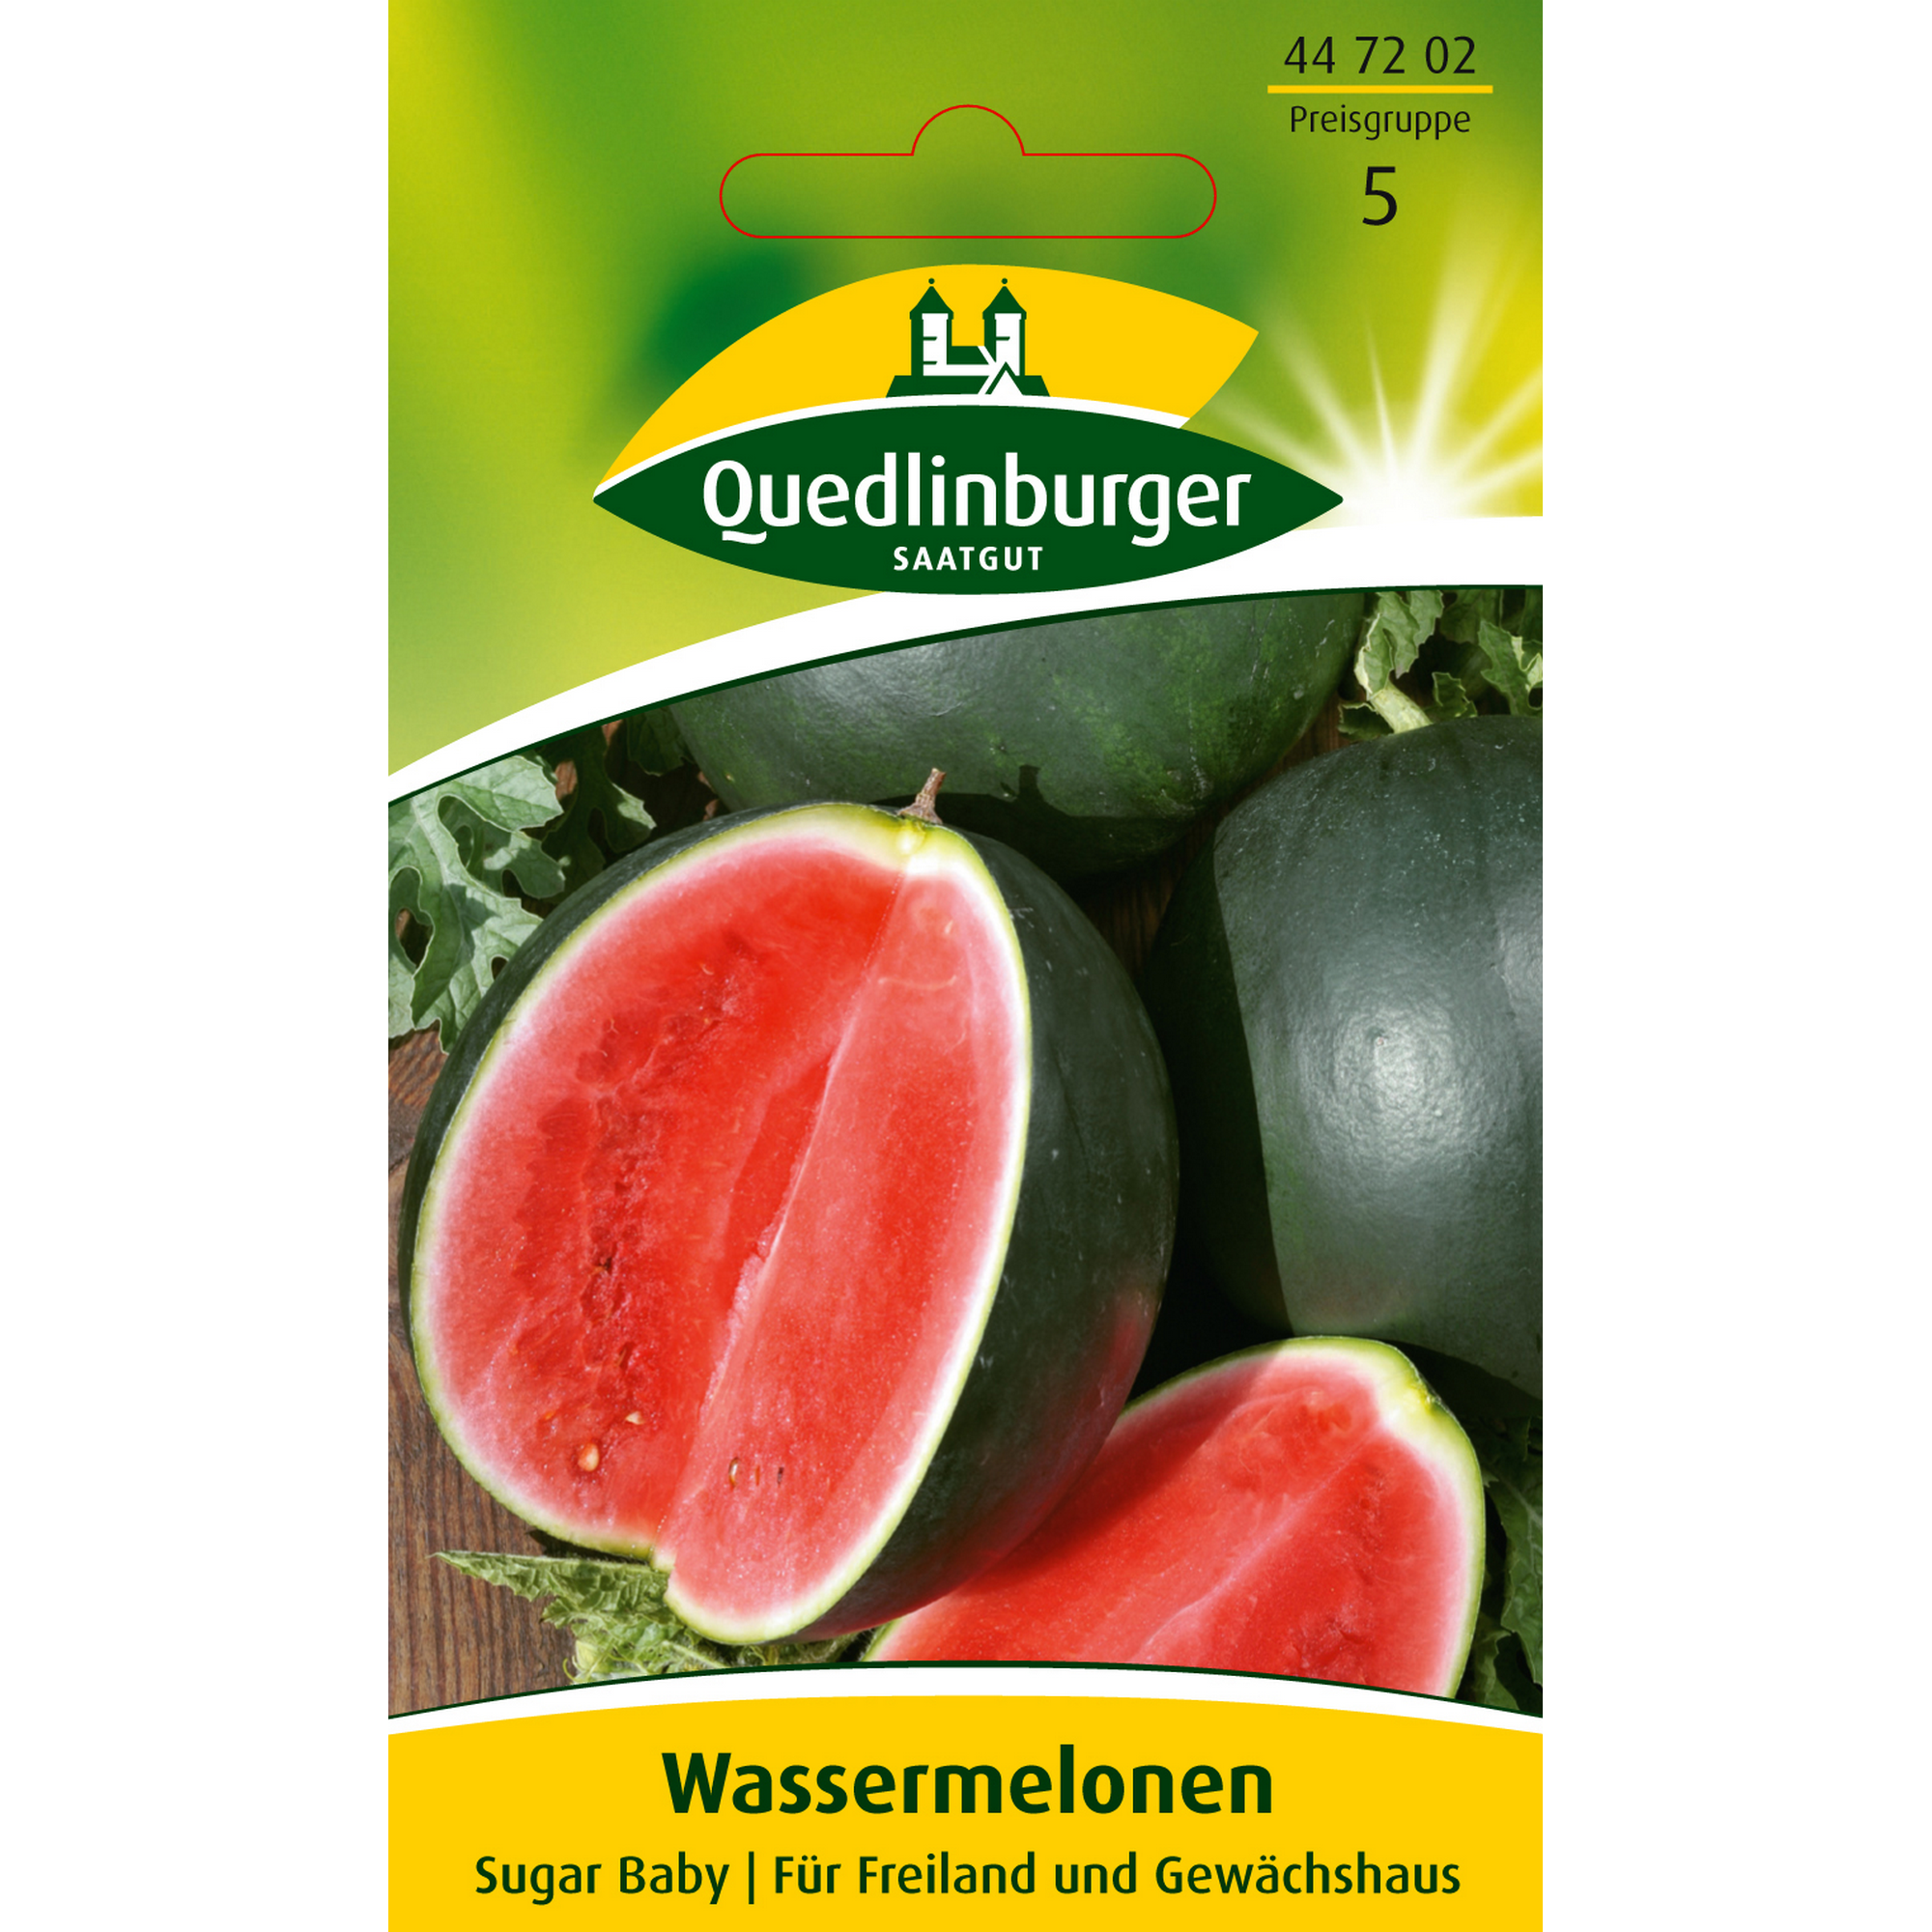 Wassermelonen 'Sugar Baby' + product picture